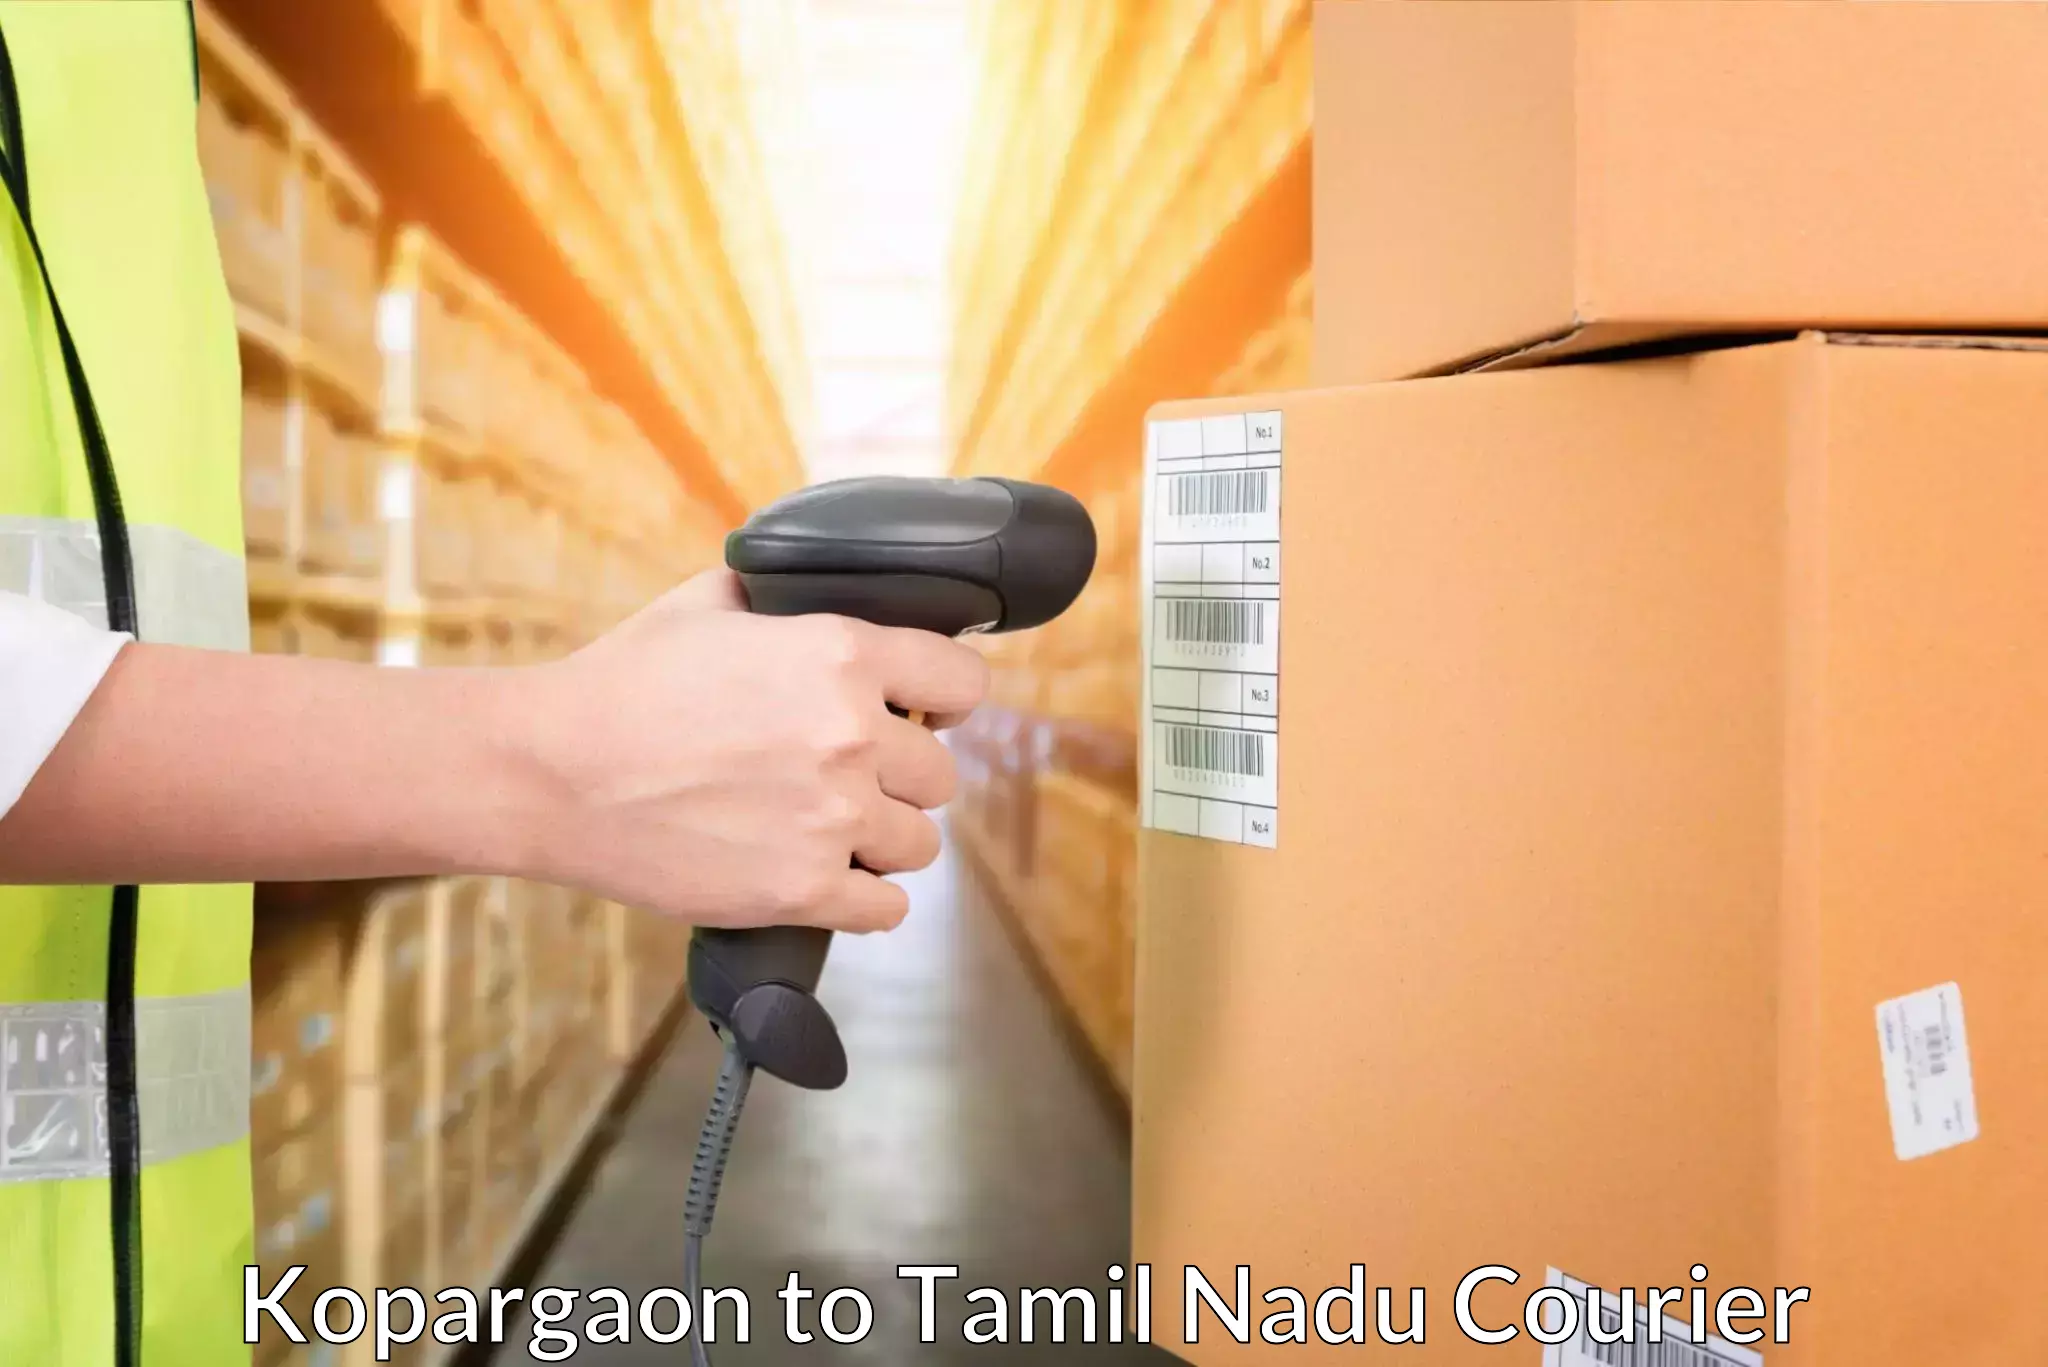 On-call courier service Kopargaon to Chennai Port